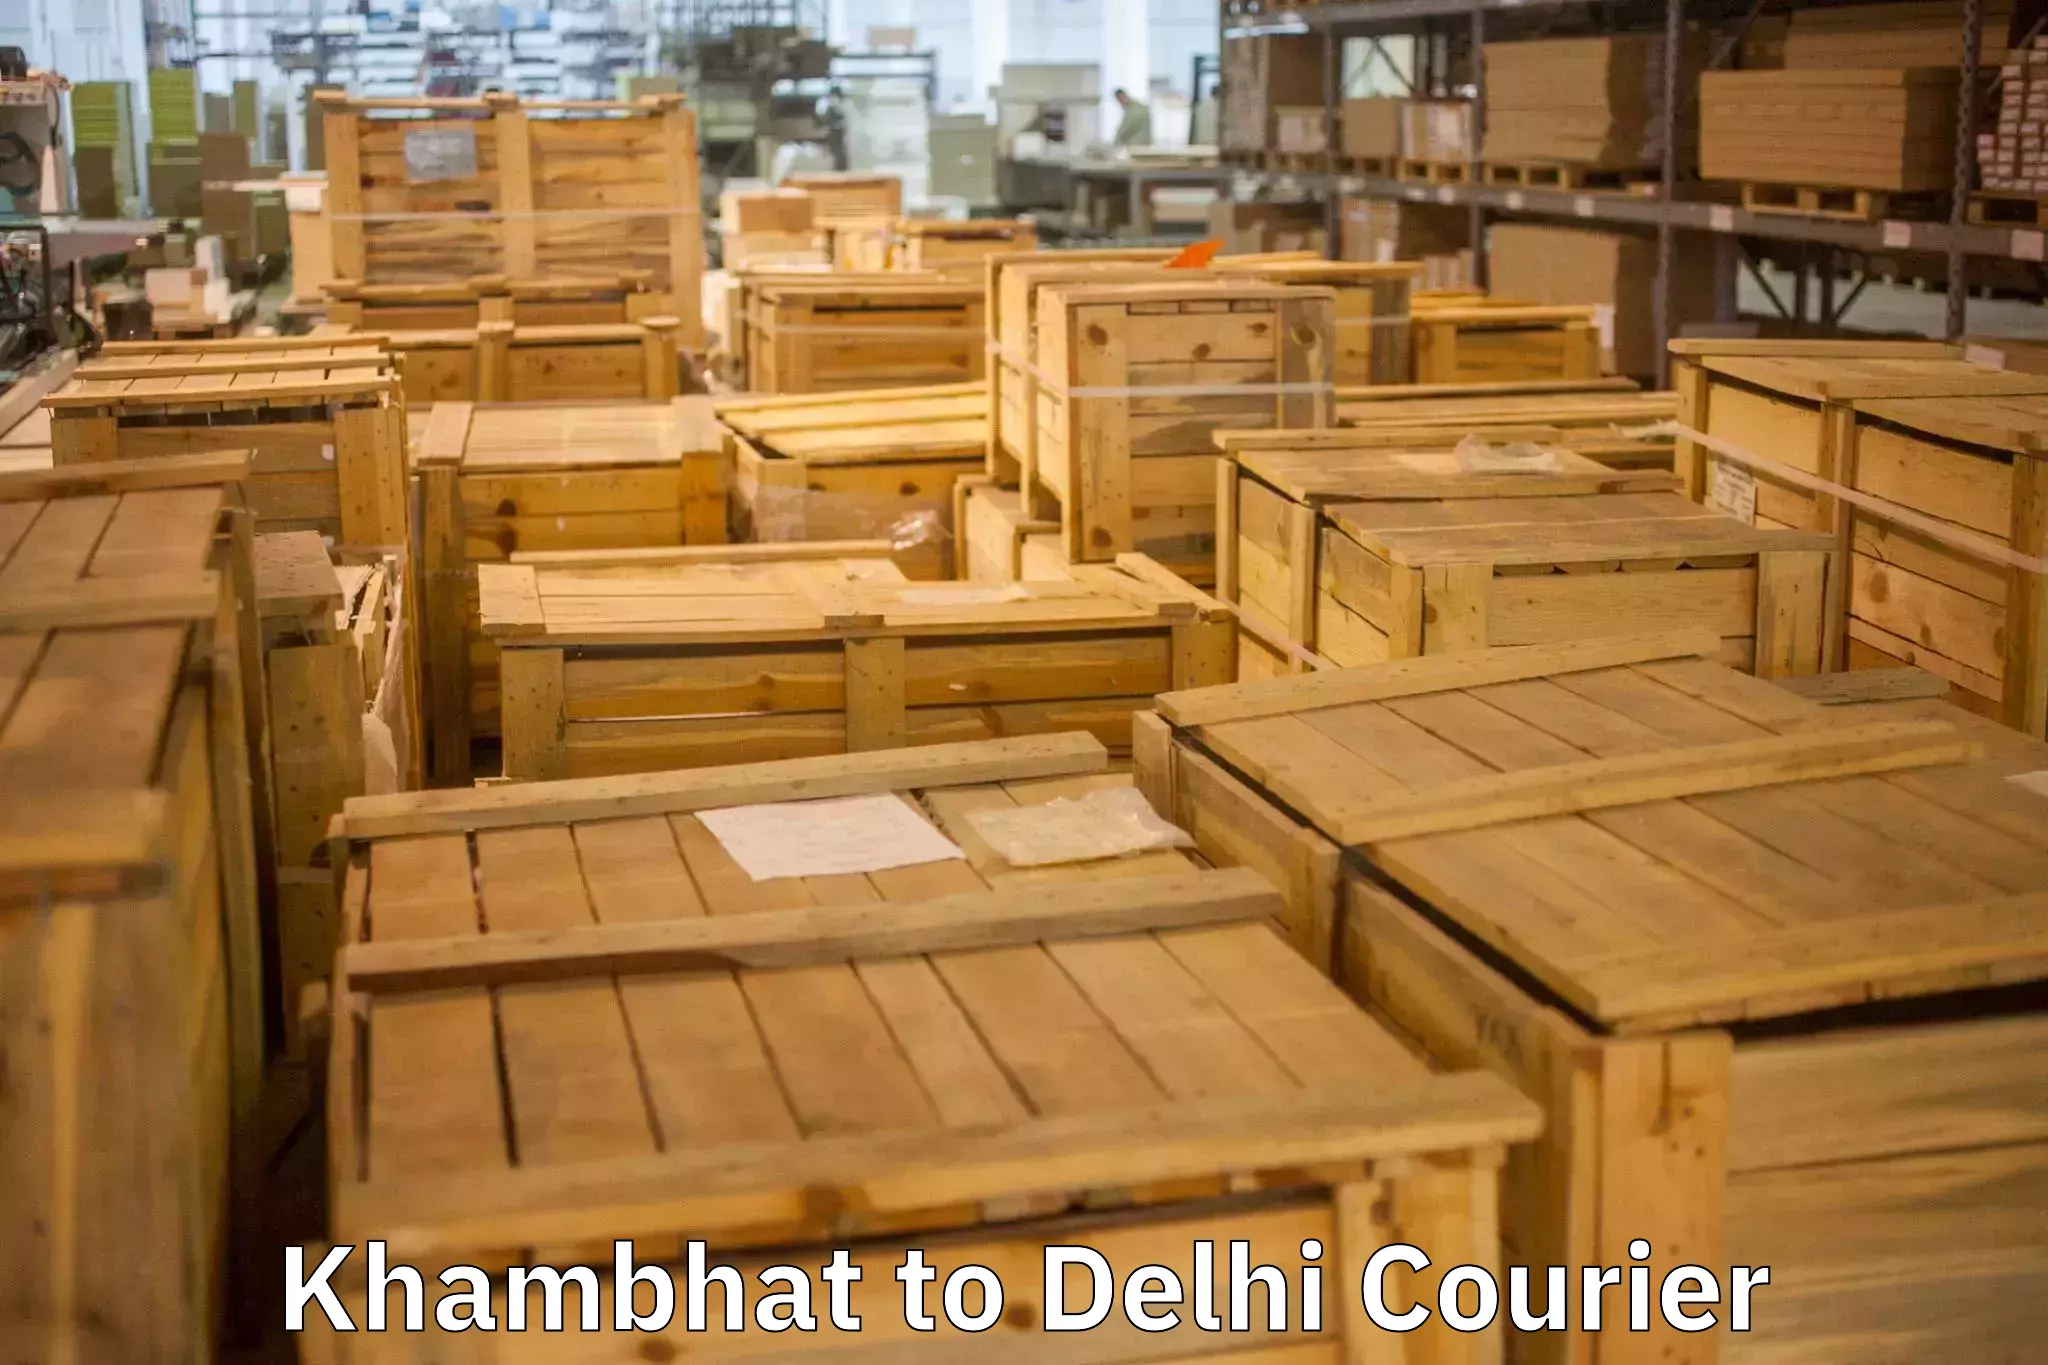 Professional moving company Khambhat to Delhi